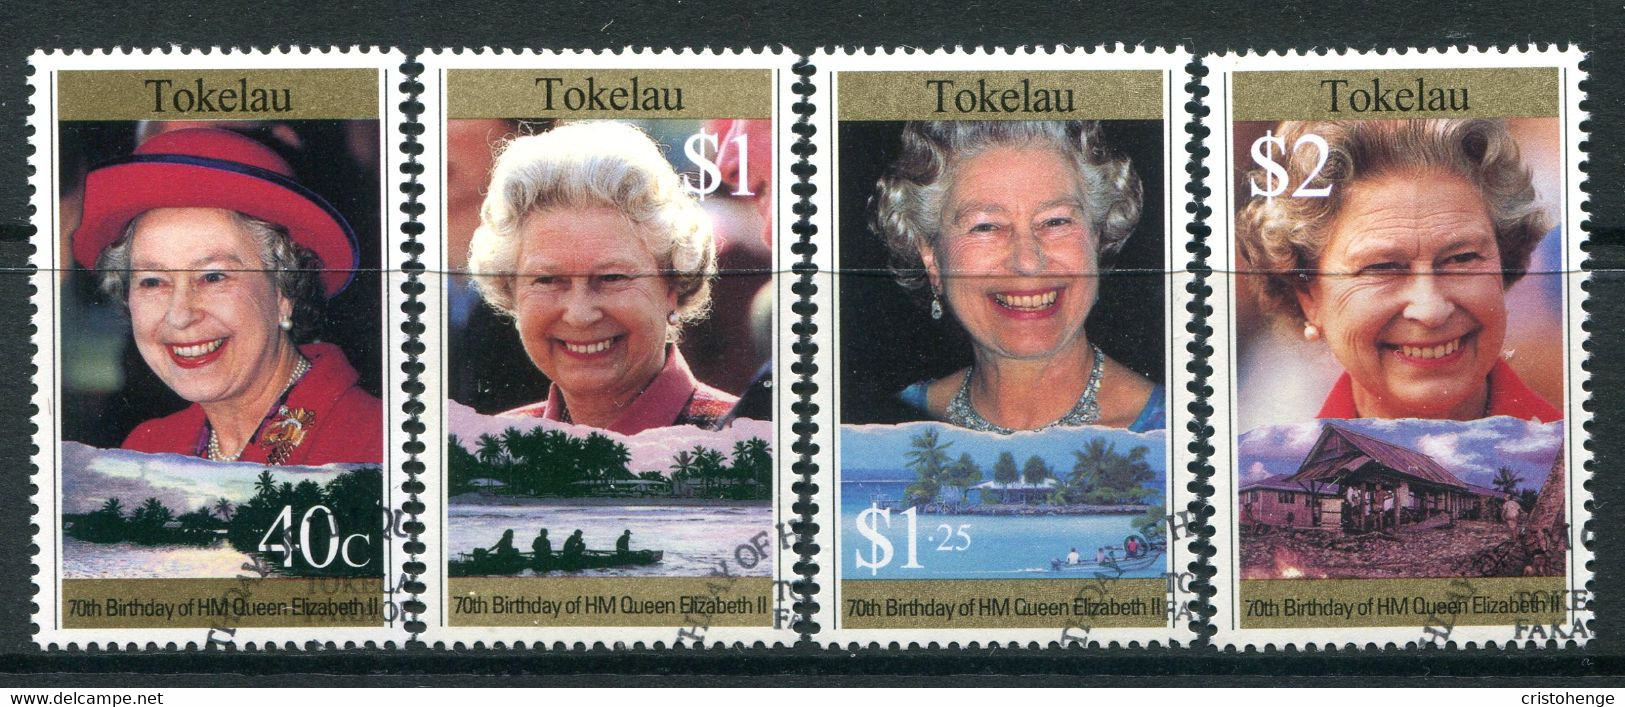 Tokelau 1996 70th Birthday Of Queen Elizabeth II Set CTO Used (SG 240-243) - Tokelau